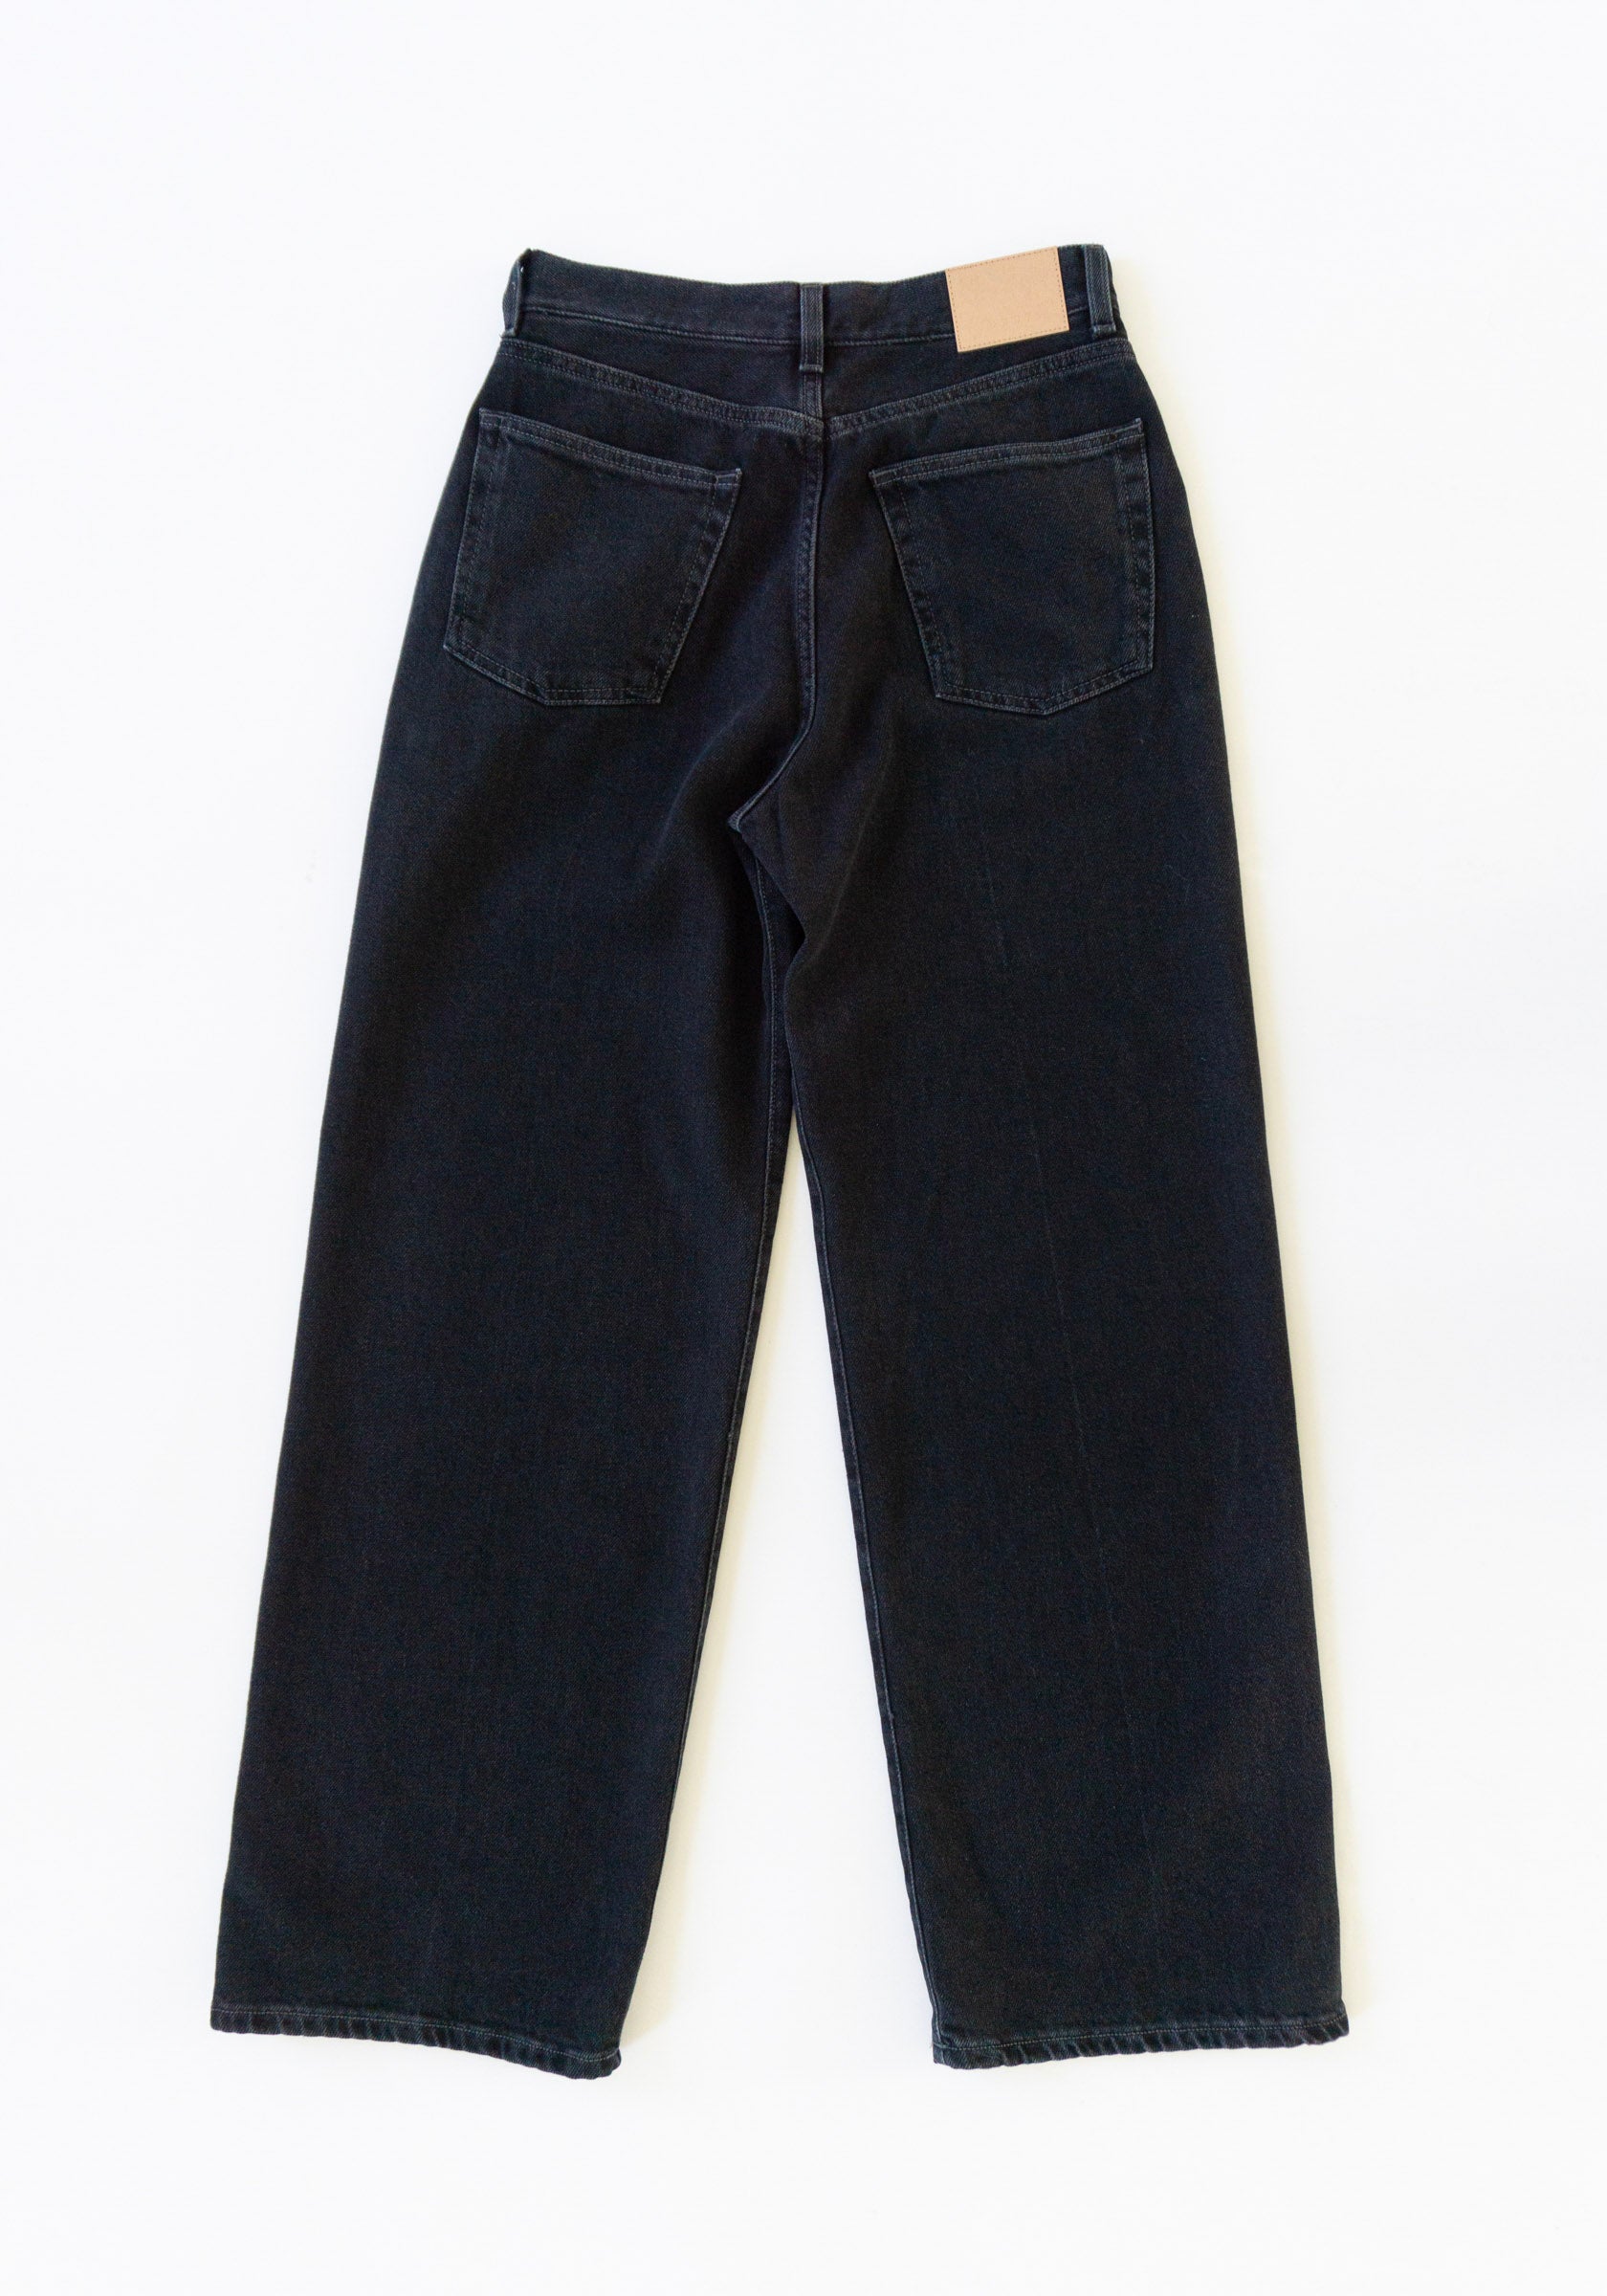 6397 Wide Jean in Black Vintage